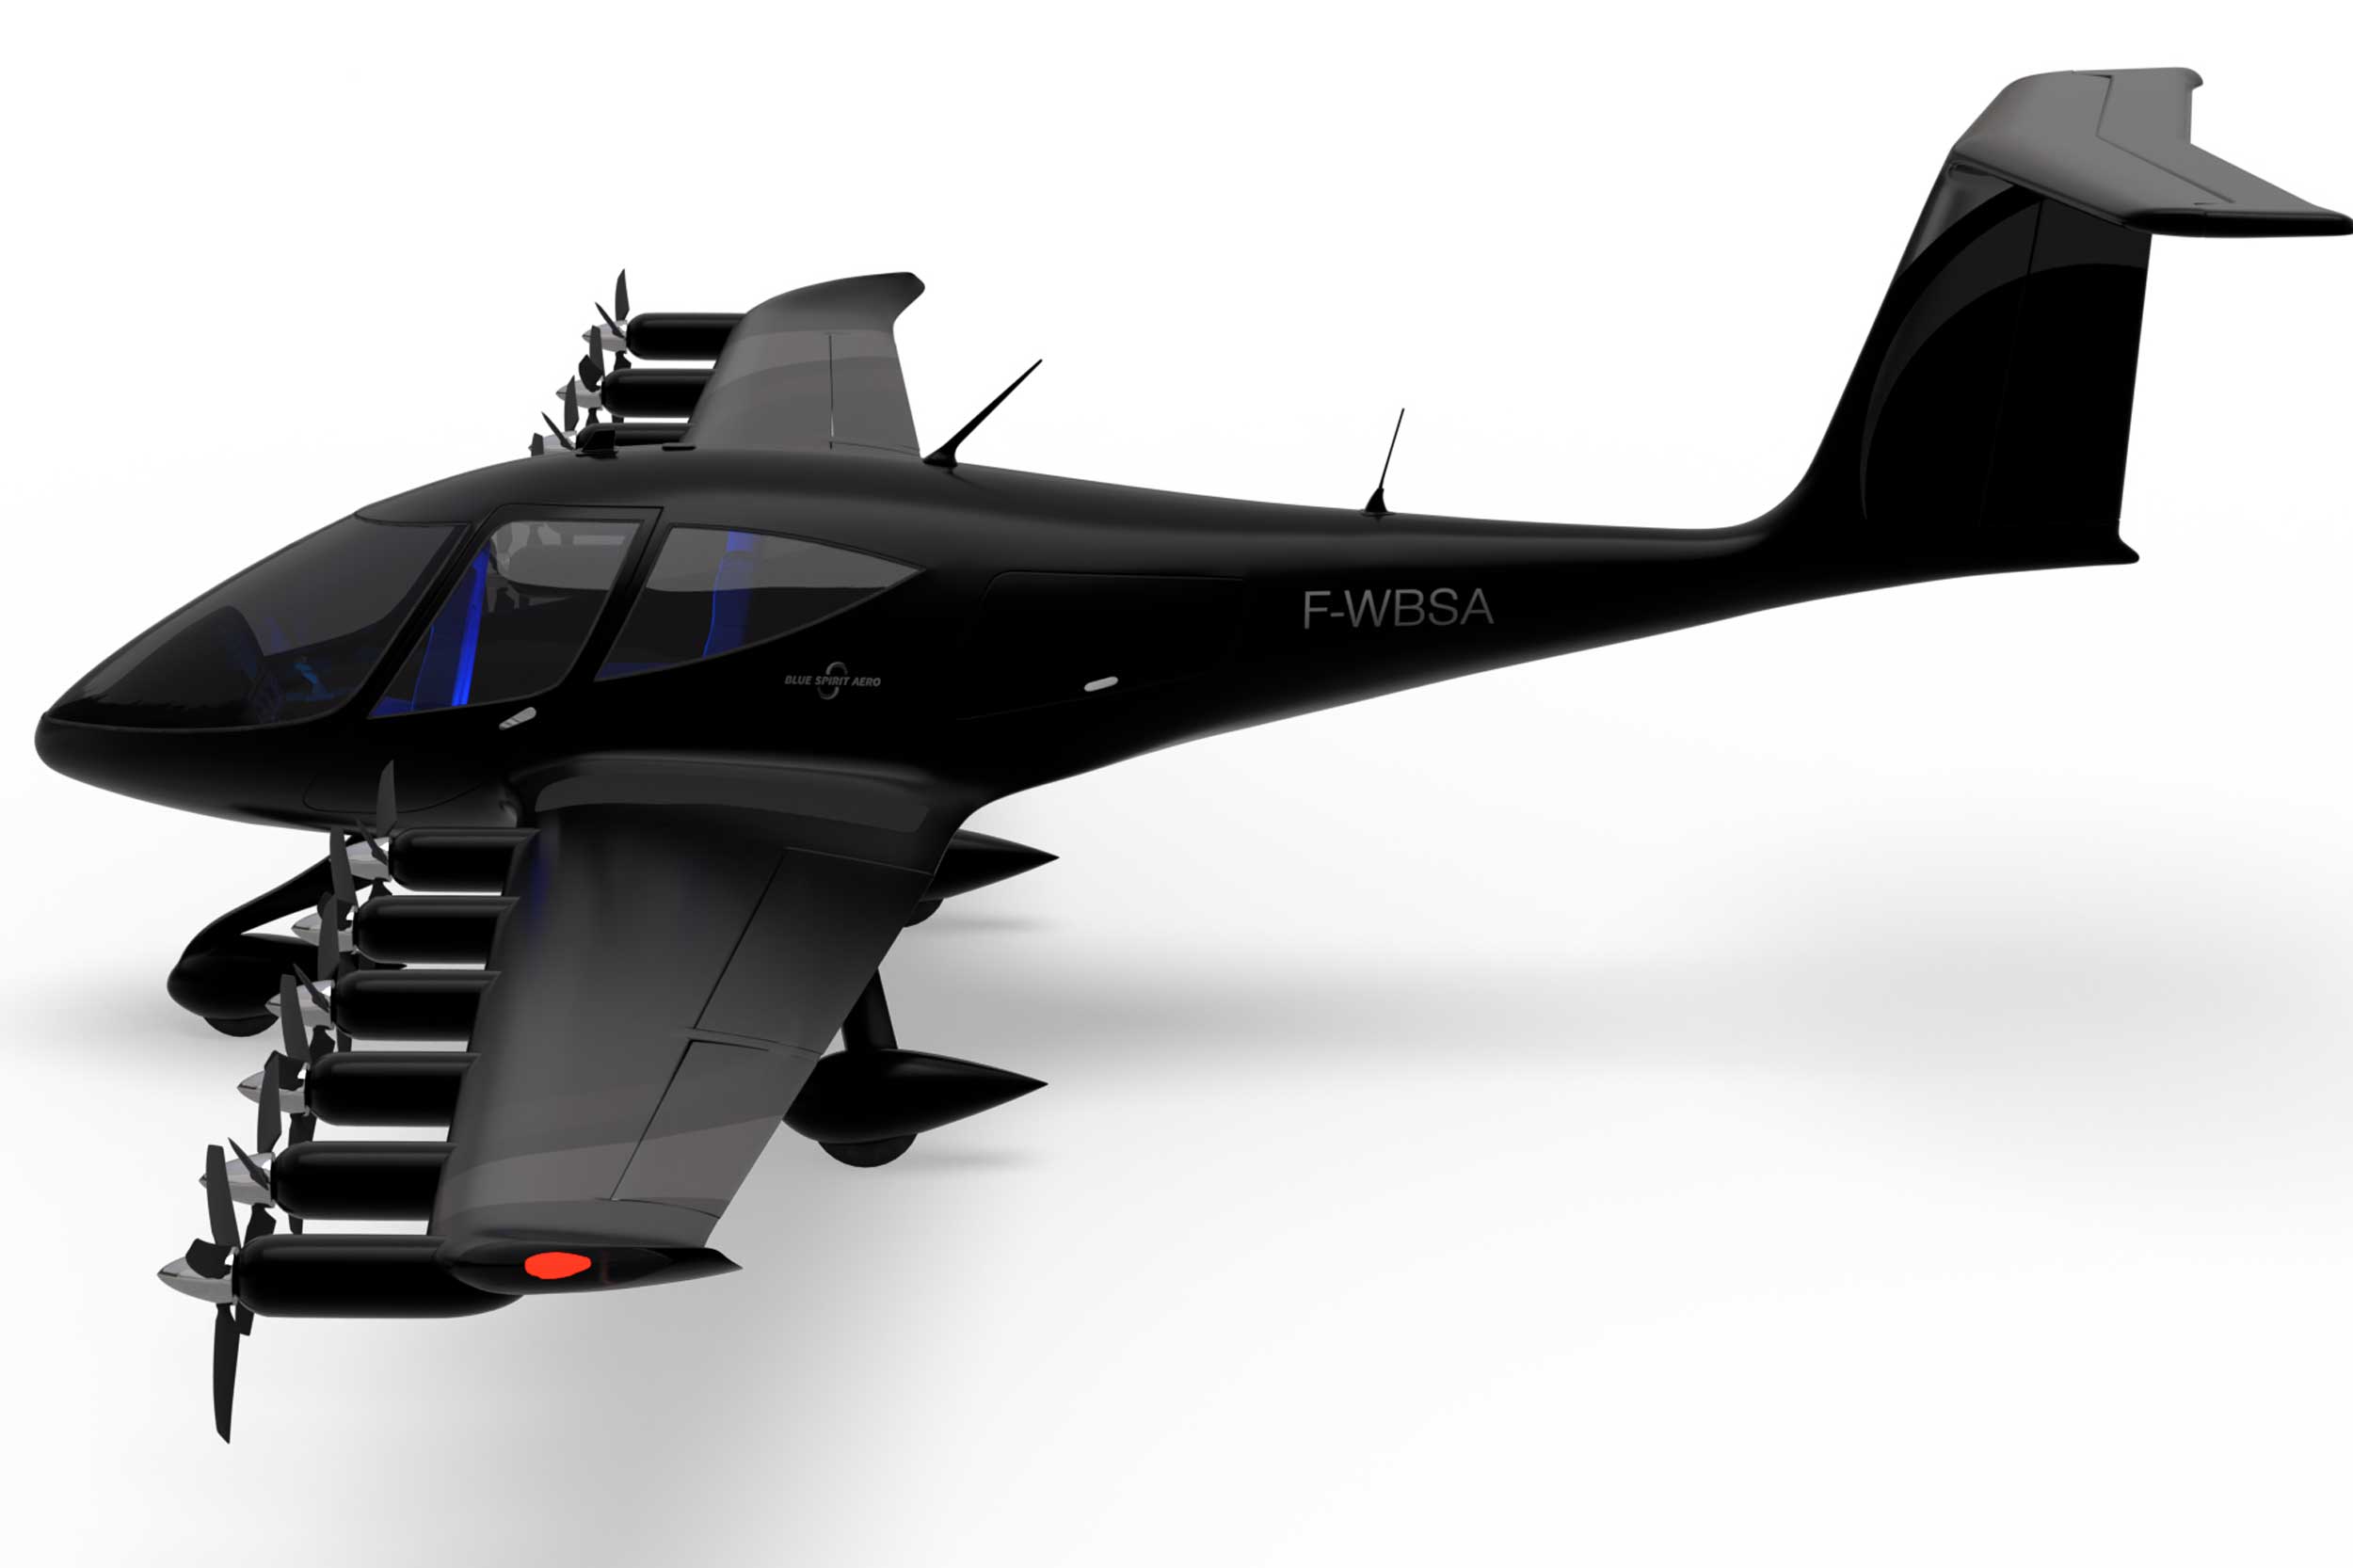 Remove before flight - Dragonfly Aerospace